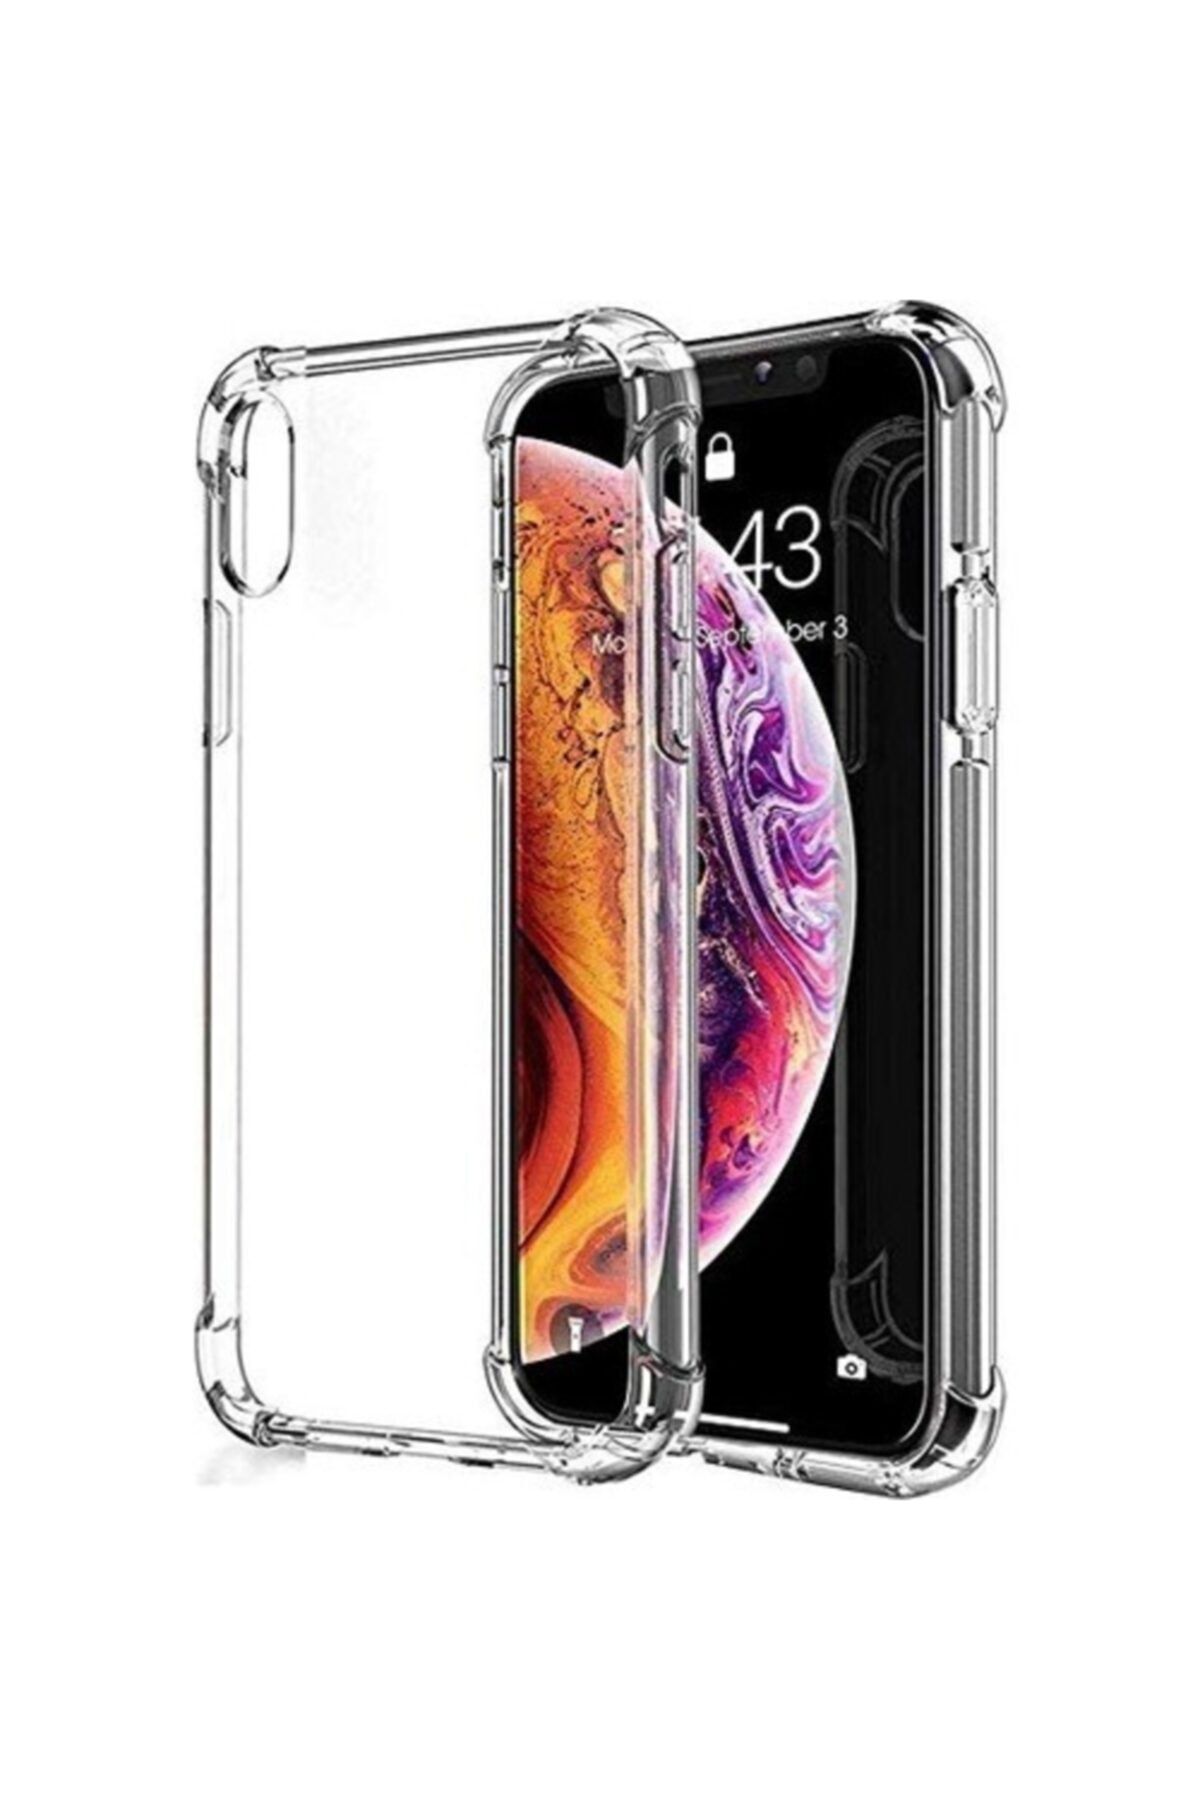 Fibaks Apple Iphone Xs Max Kılıf Crystal Sert Pc Antishock Darbe Emici Kenar Şeffaf Silikon Kapak